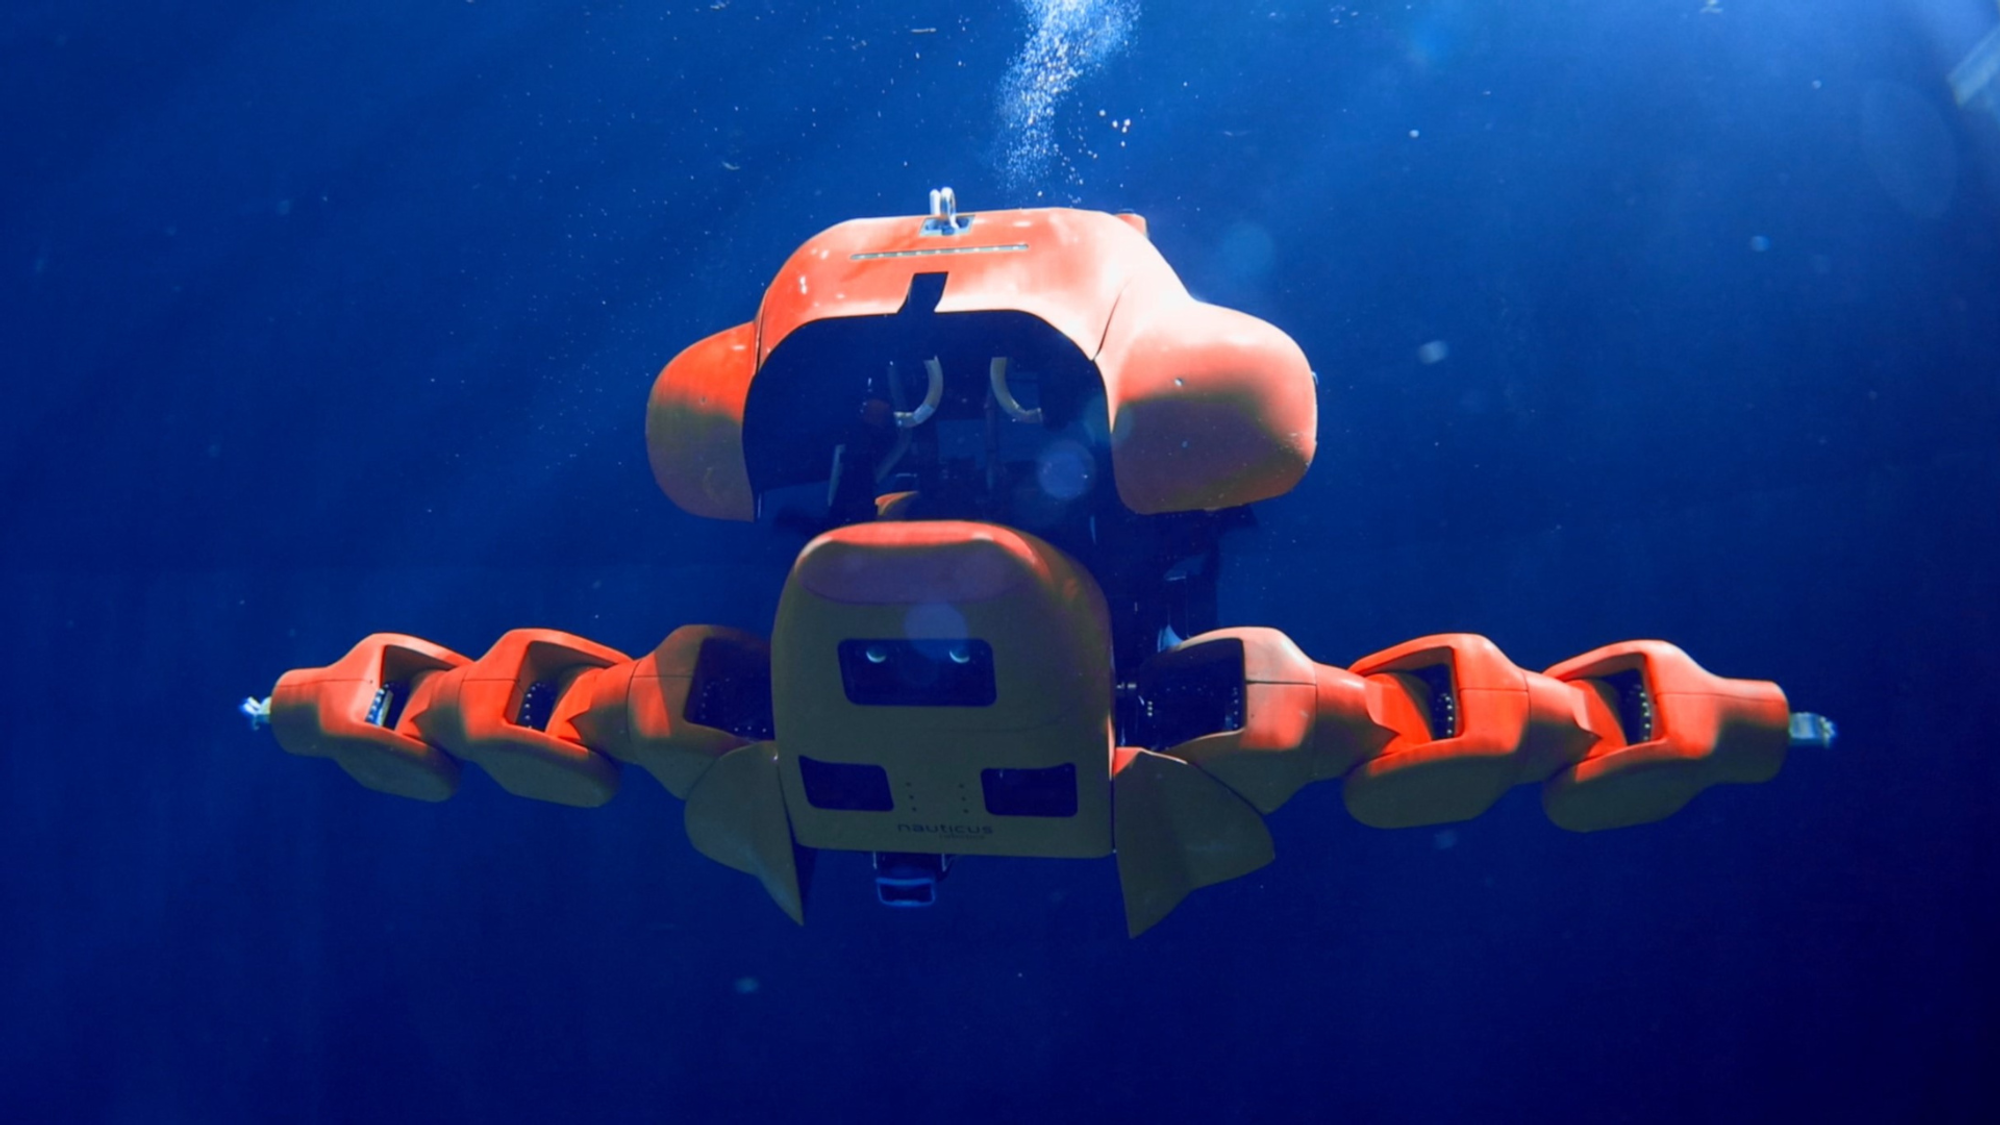 Meet Aquanaut: A new deep sea diving robot from NASA